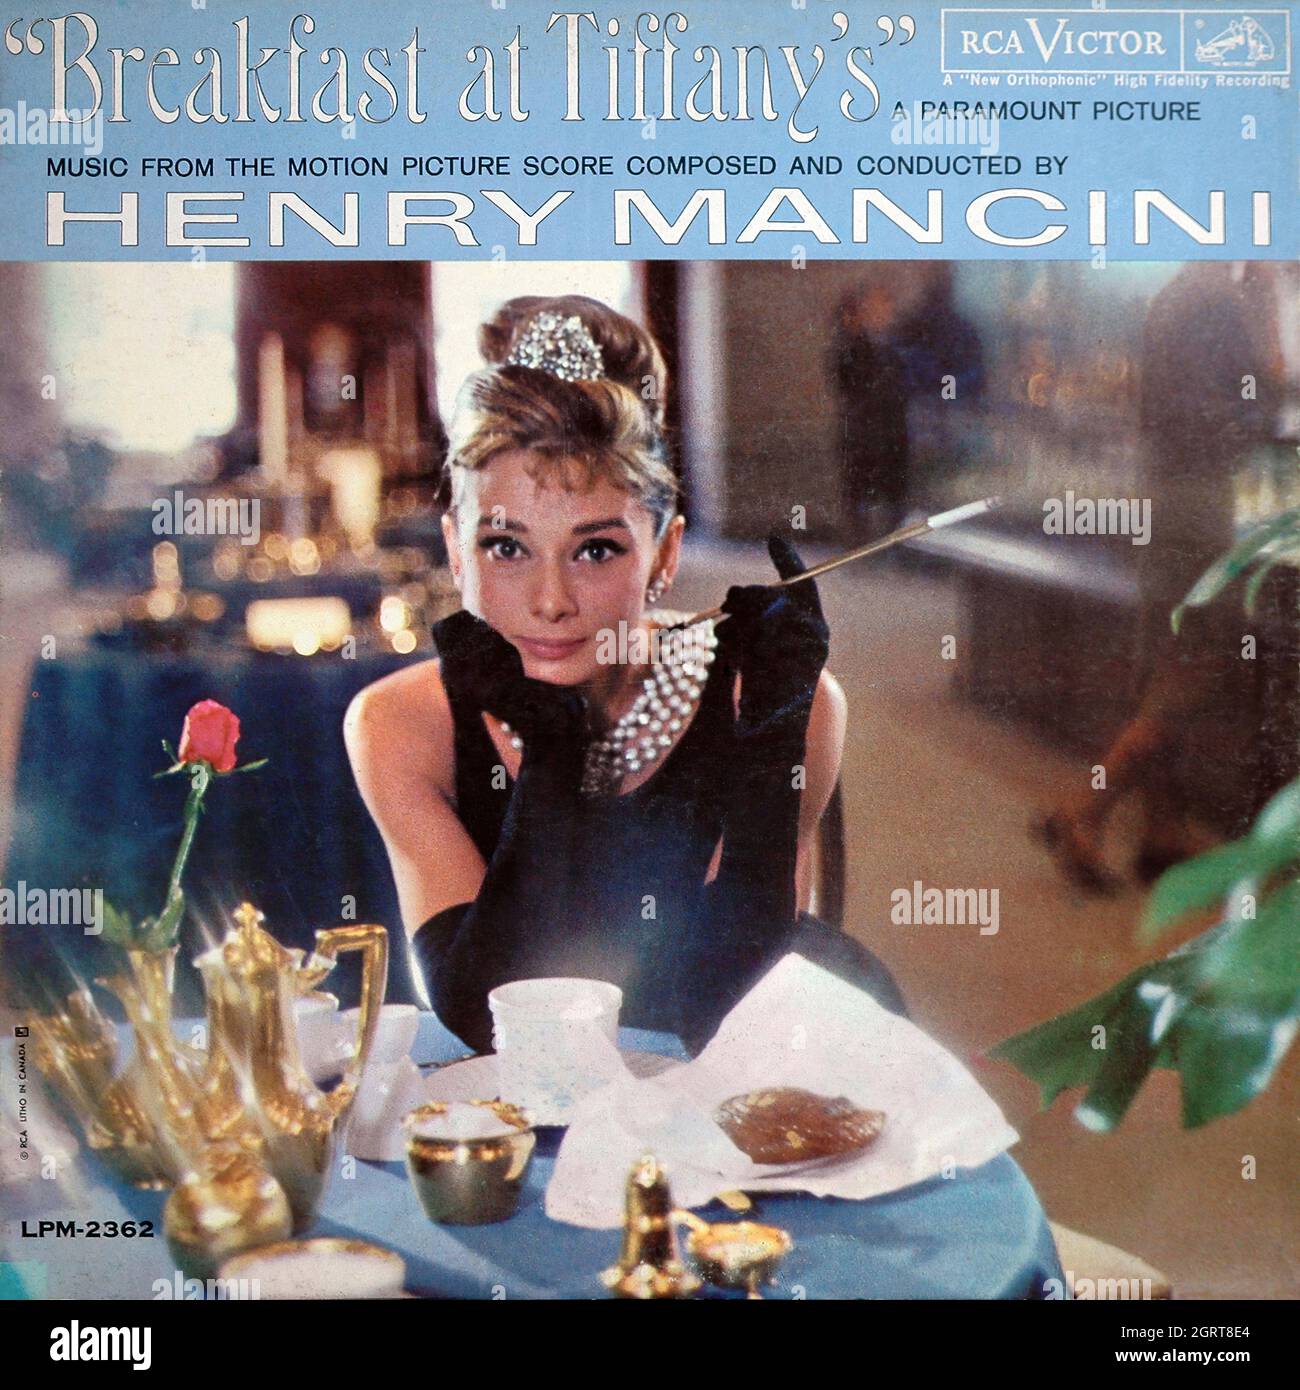 Henry Mancini -  Breakfast At Tiffany's  (movie soundtrack) 1961  - Vintage Vinyl 33 rpm record Stock Photo